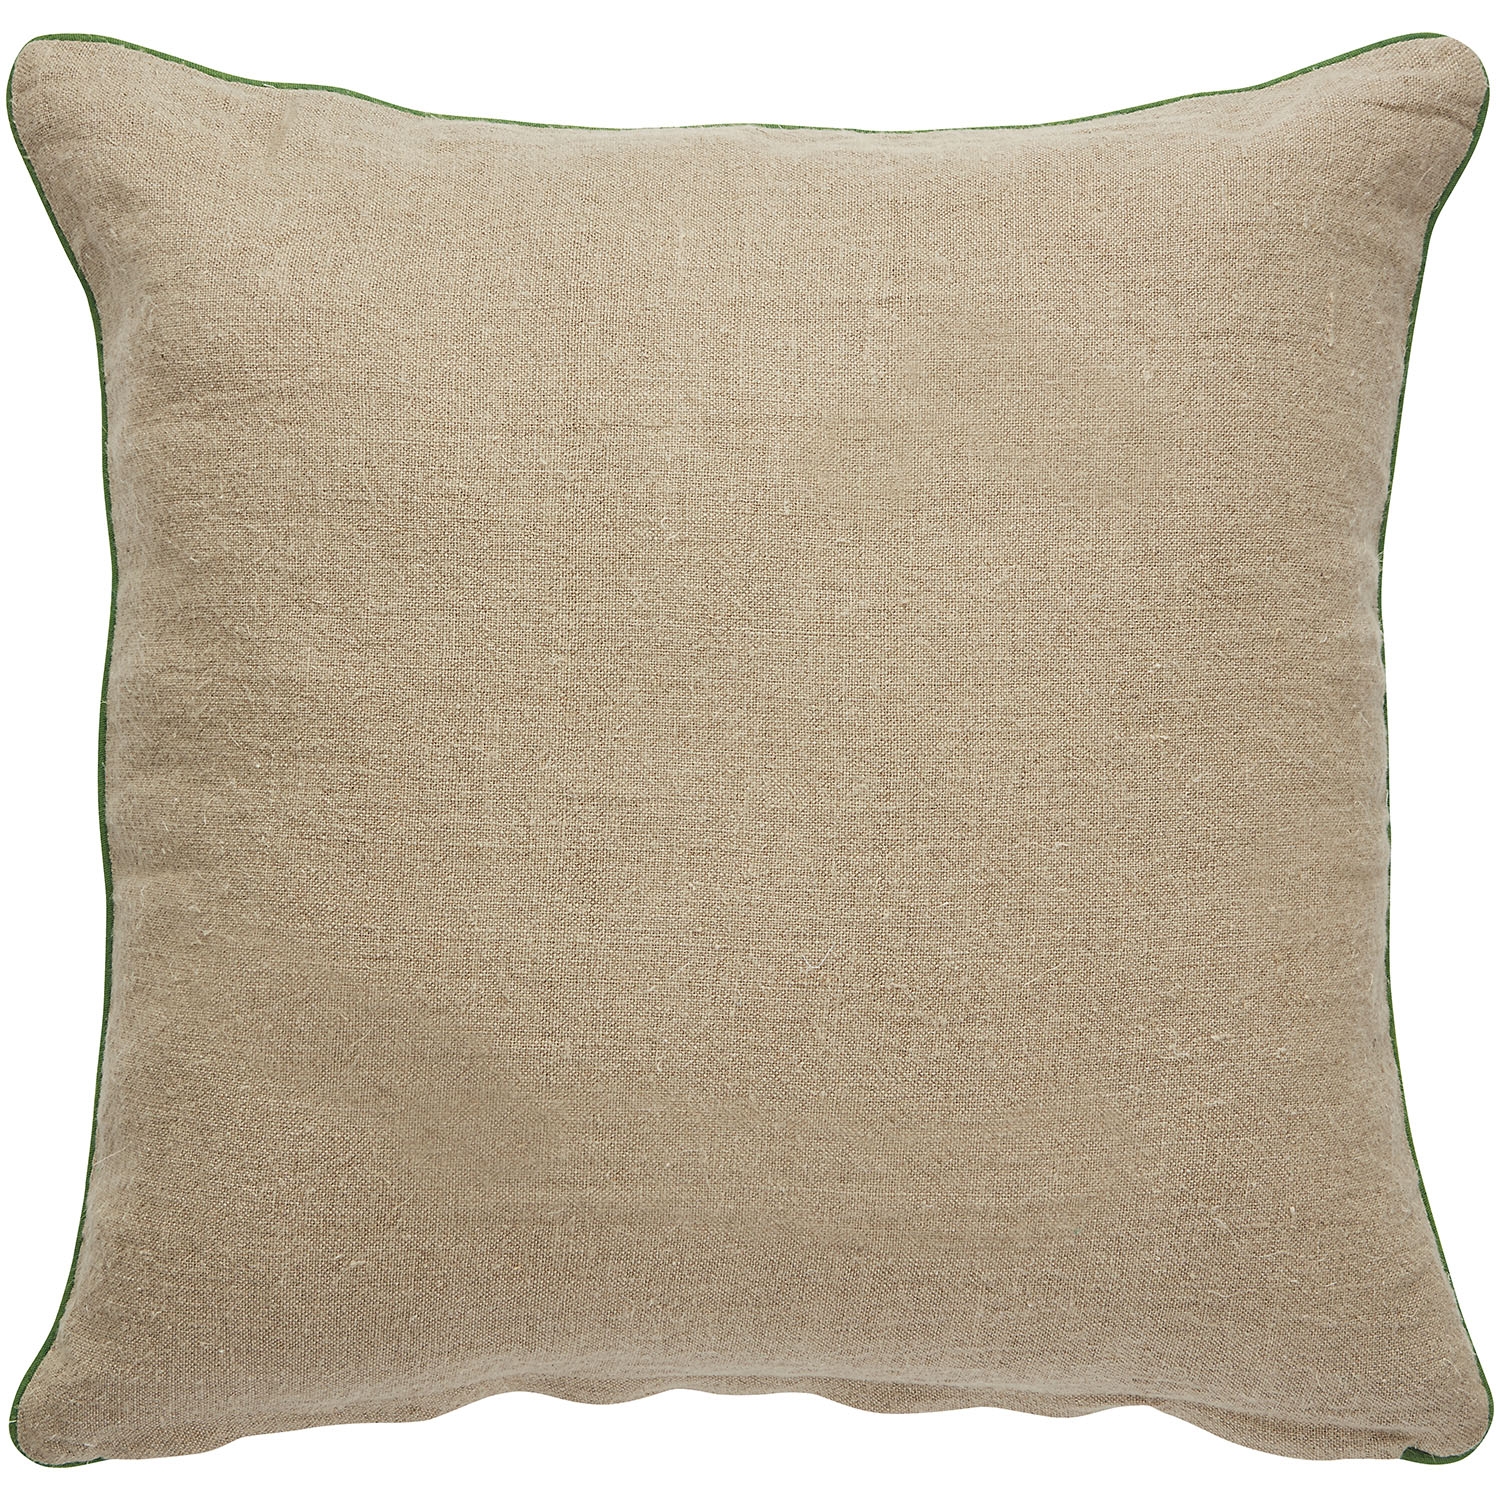 Design (US) Green 22"X22" Pillow - Image 1